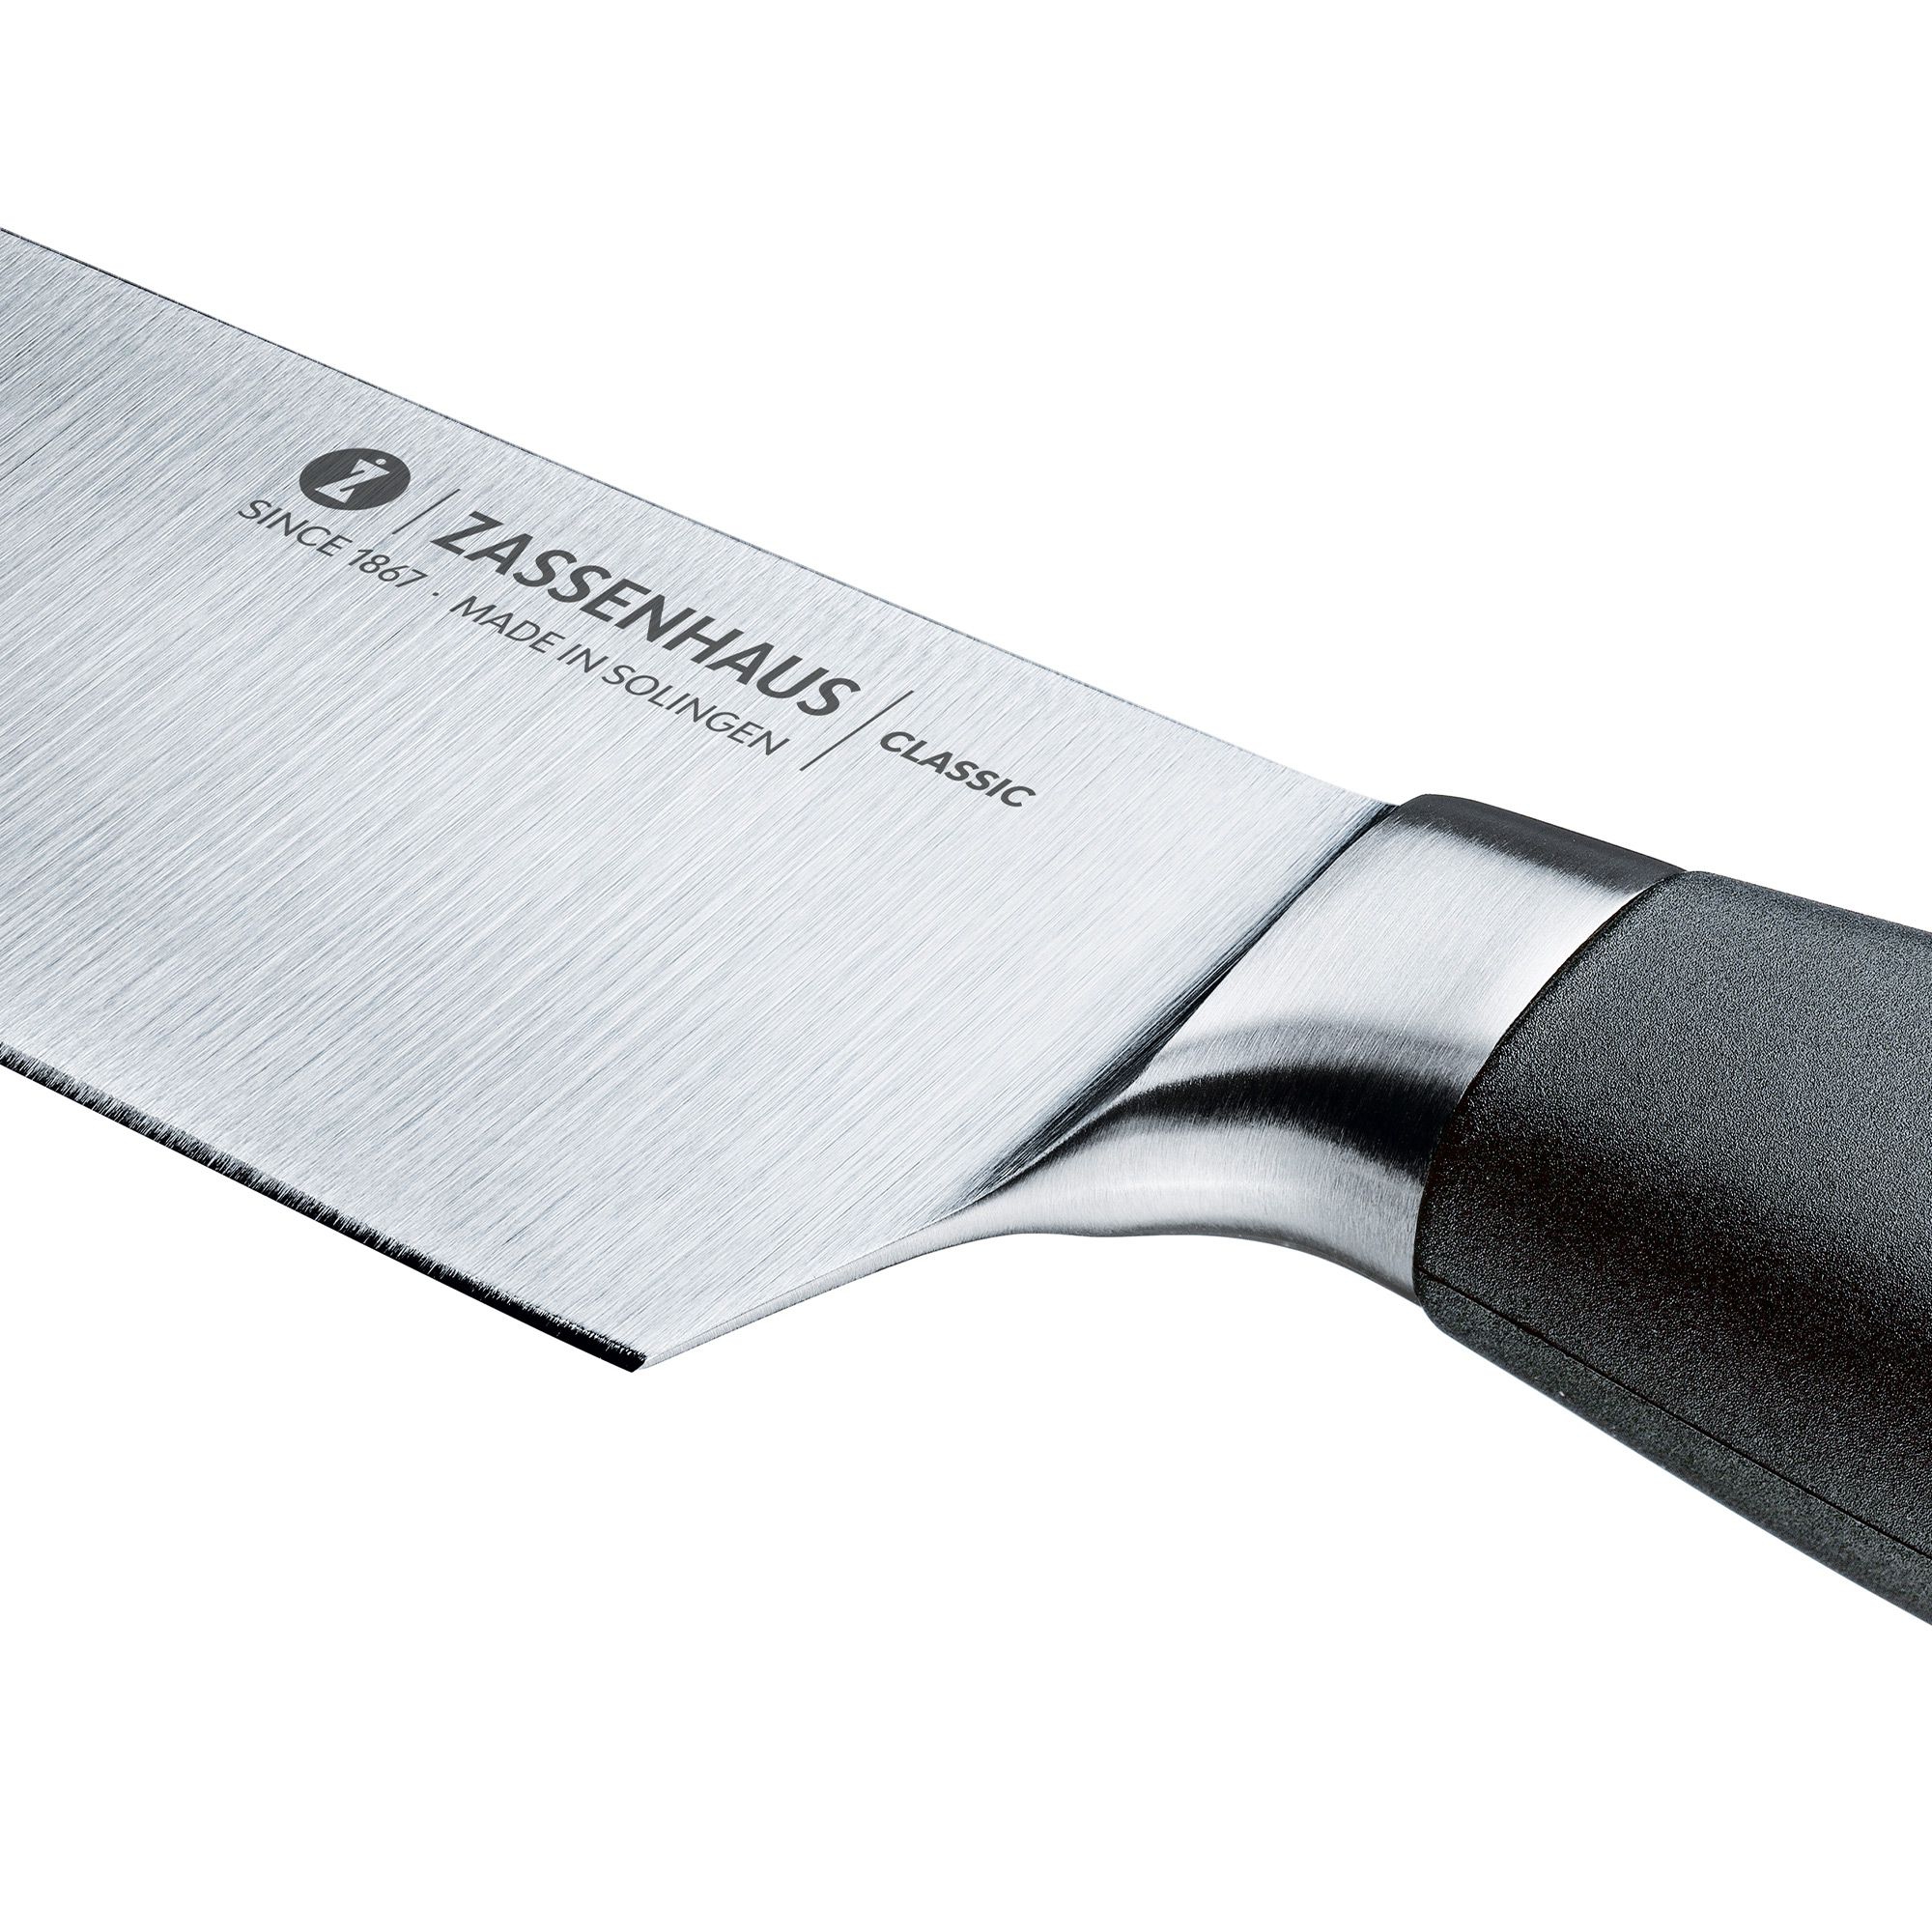 Zassenhaus - cooking knife 21 cm - CLASSIC